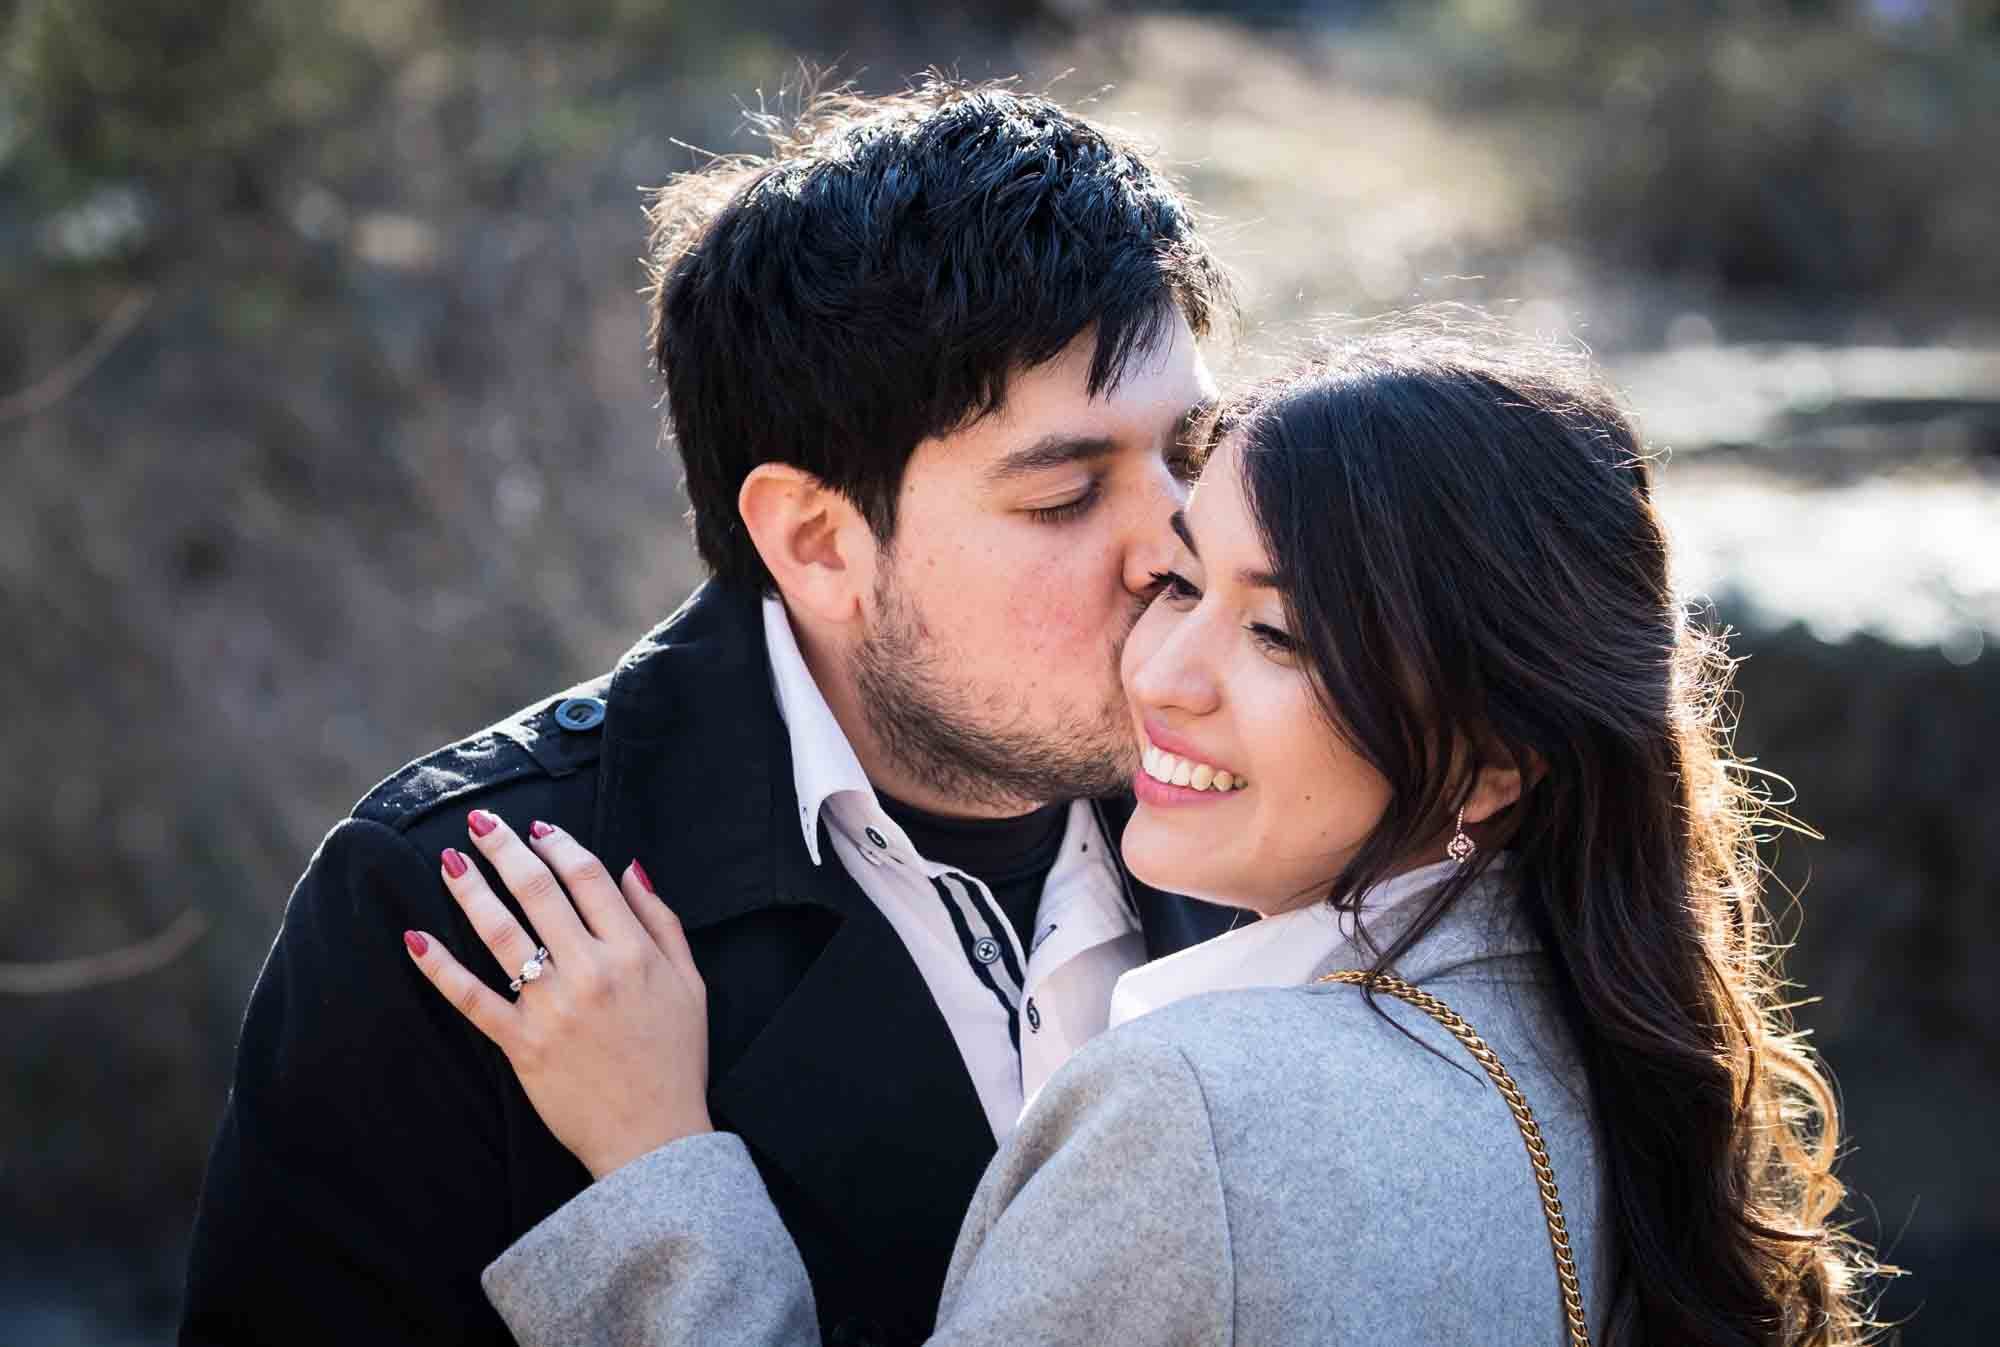 Couple photographed by San Antonio surprise engagement photographer, Kelly Williams